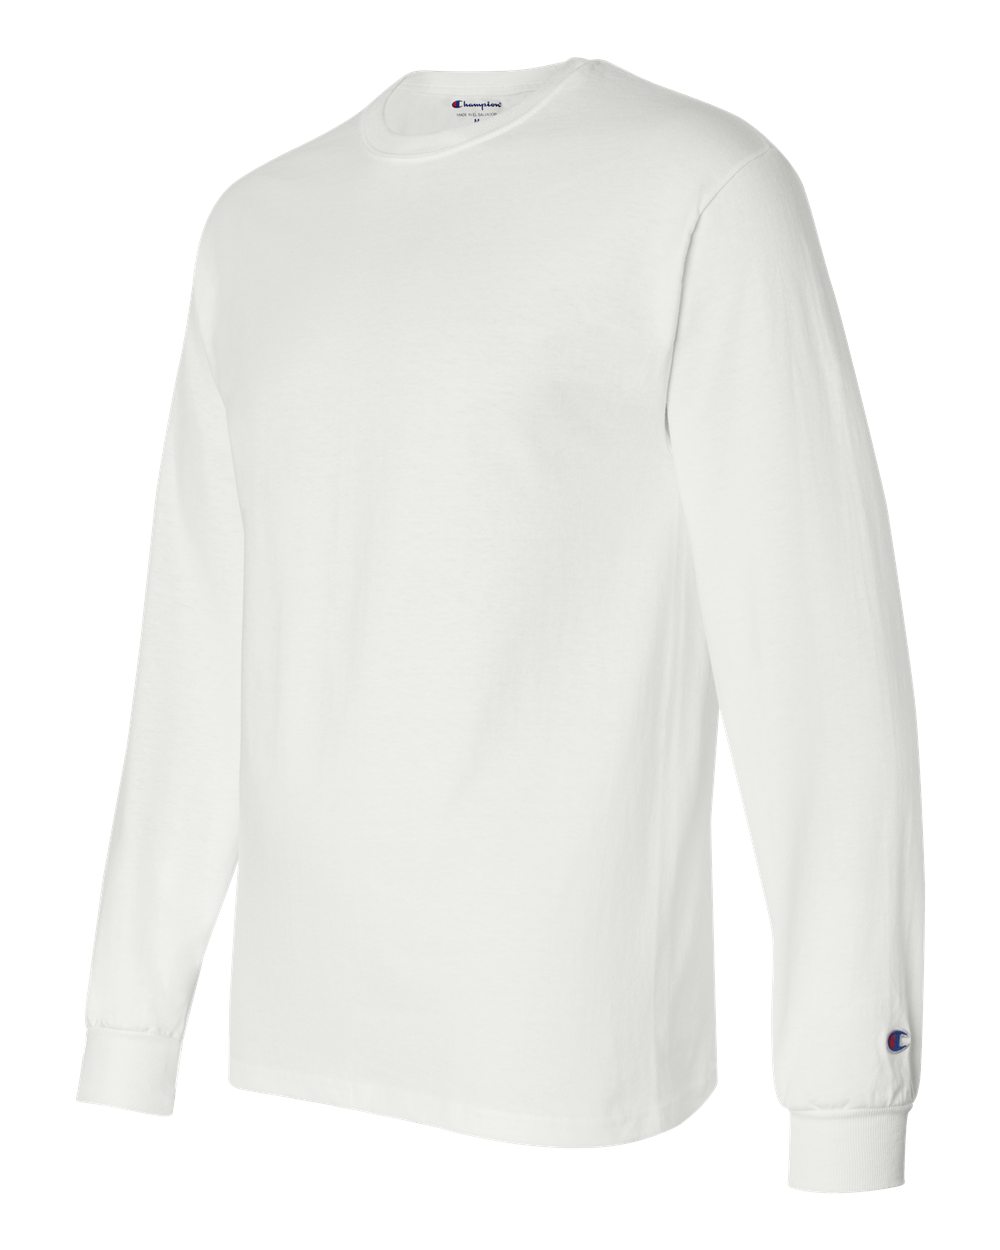 oase Kirken Brig Long Sleeve T-Shirt - Champion CC8C | Clothing Shop Online